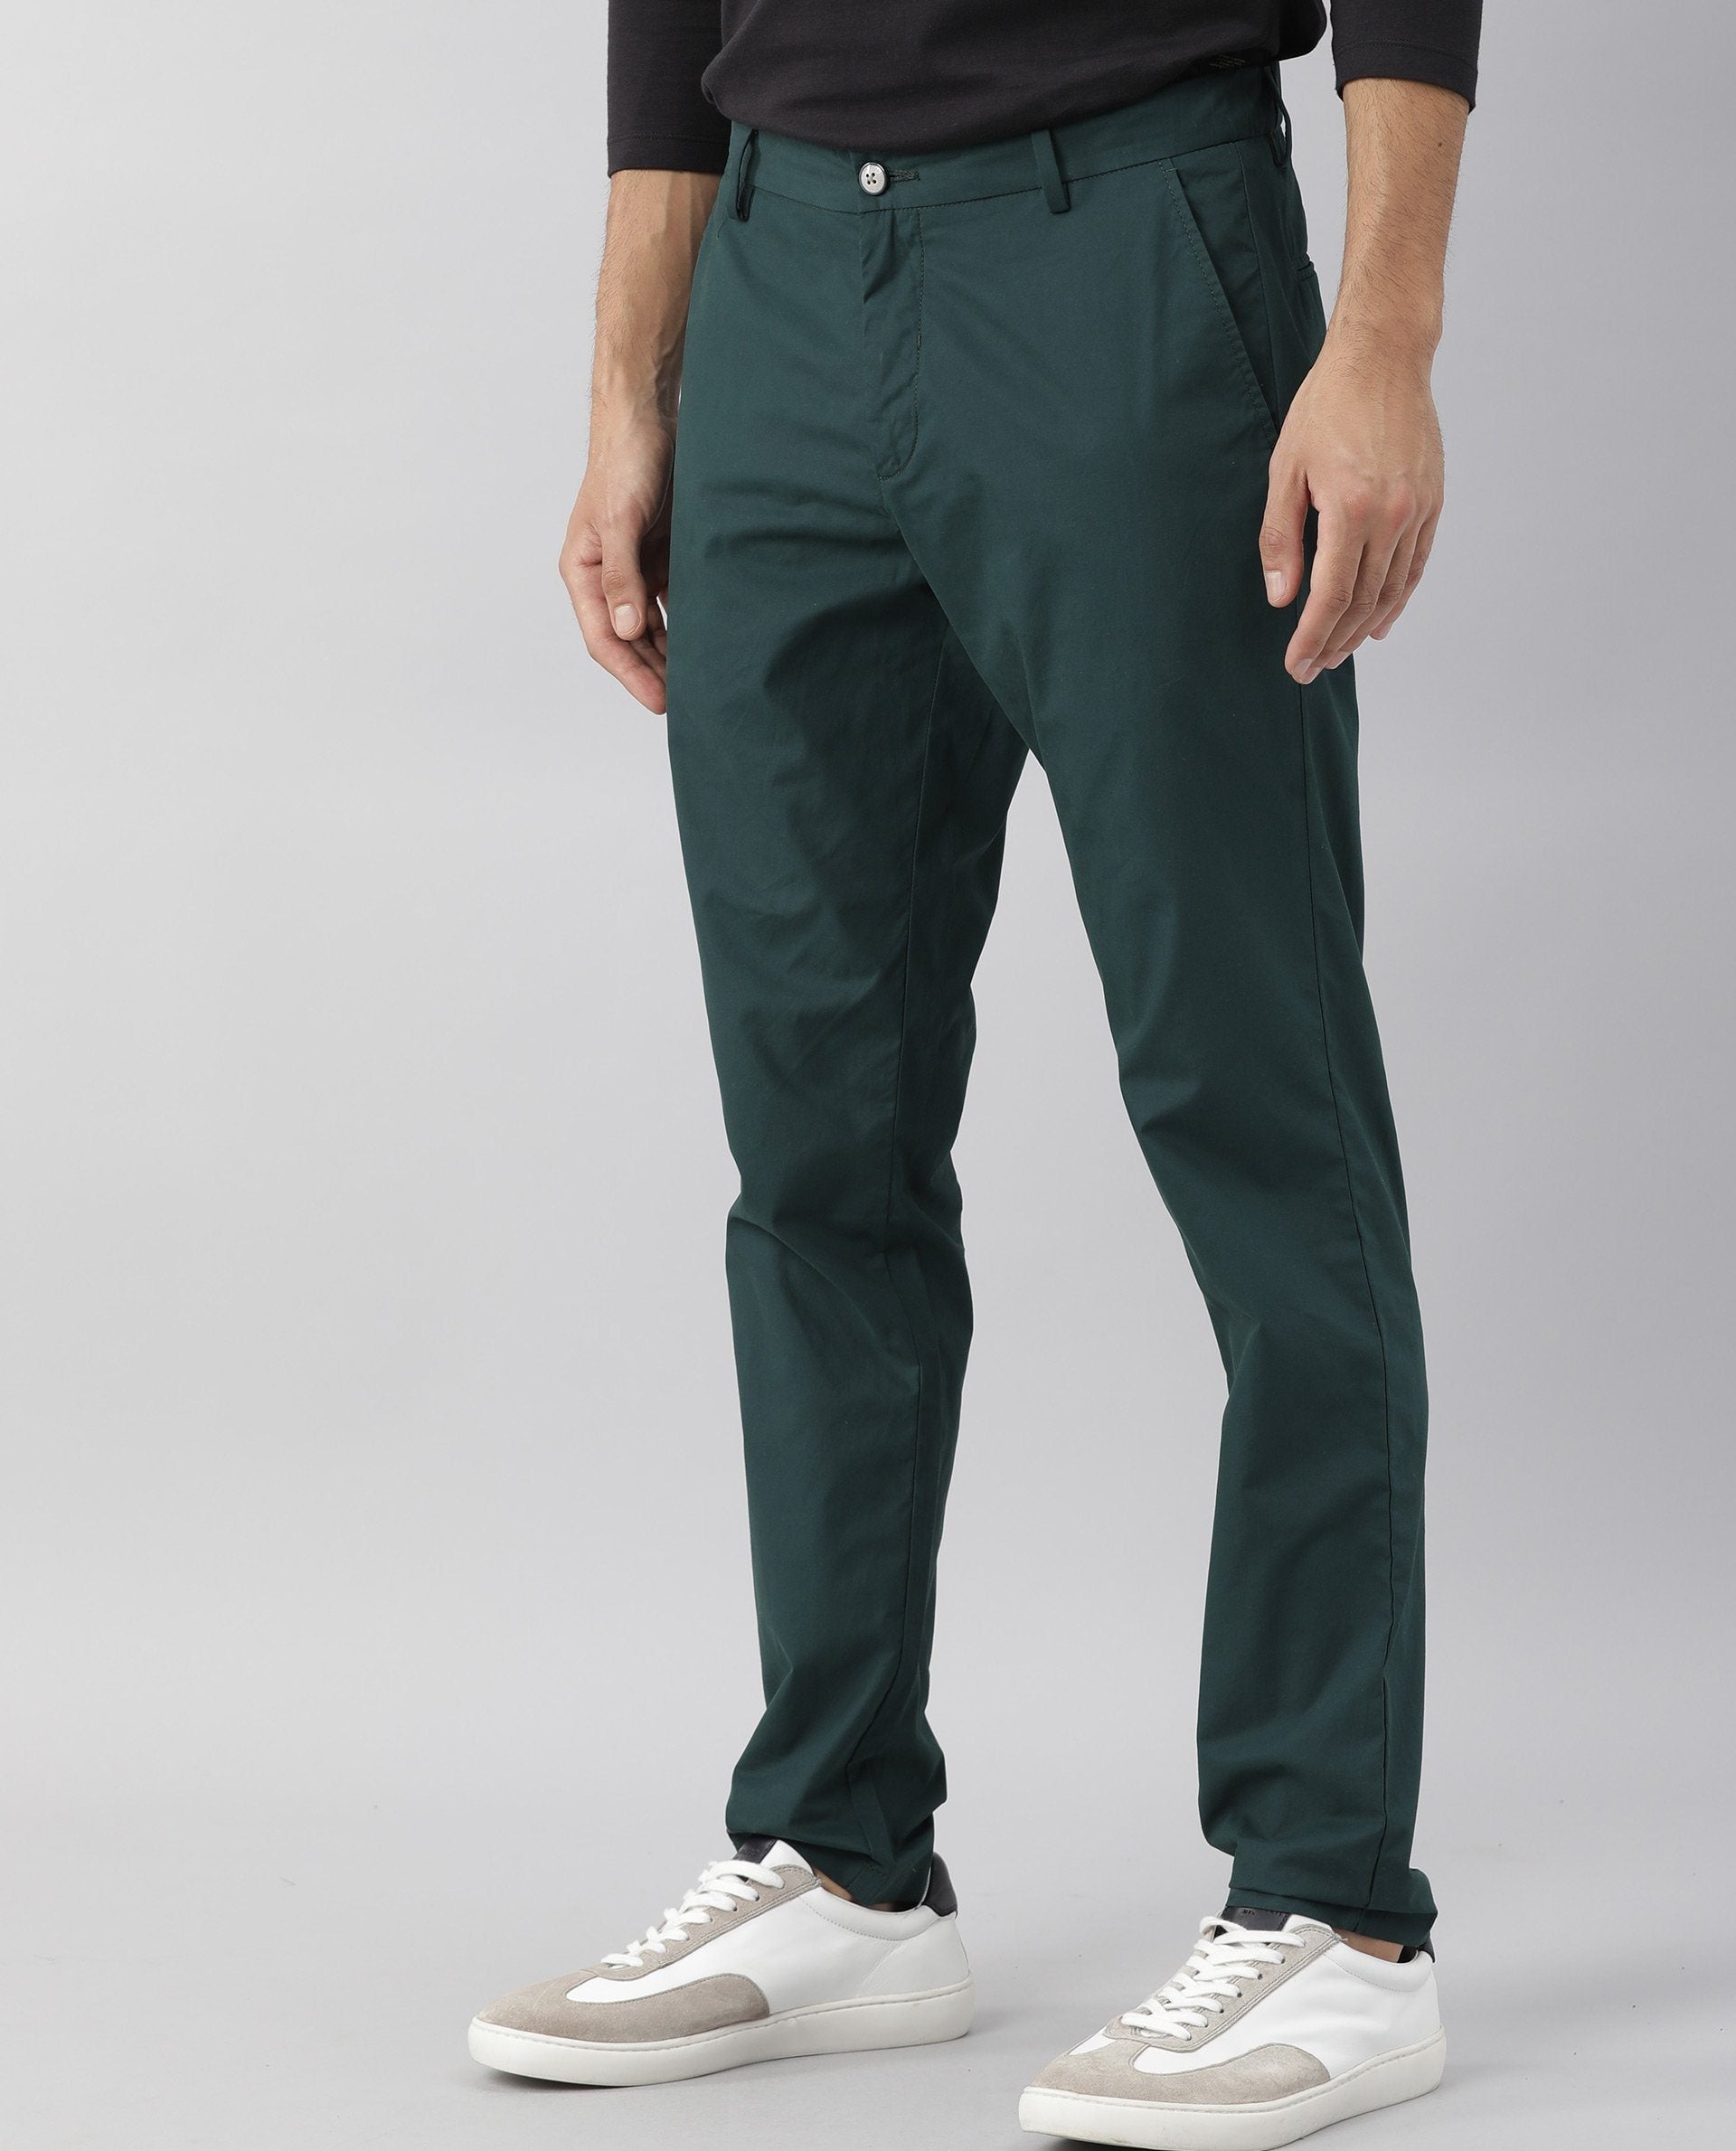 Bottle Green Herringbone Highland Tweed Trousers : Made To Measure Custom  Jeans For Men & Women, MakeYourOwnJeans®